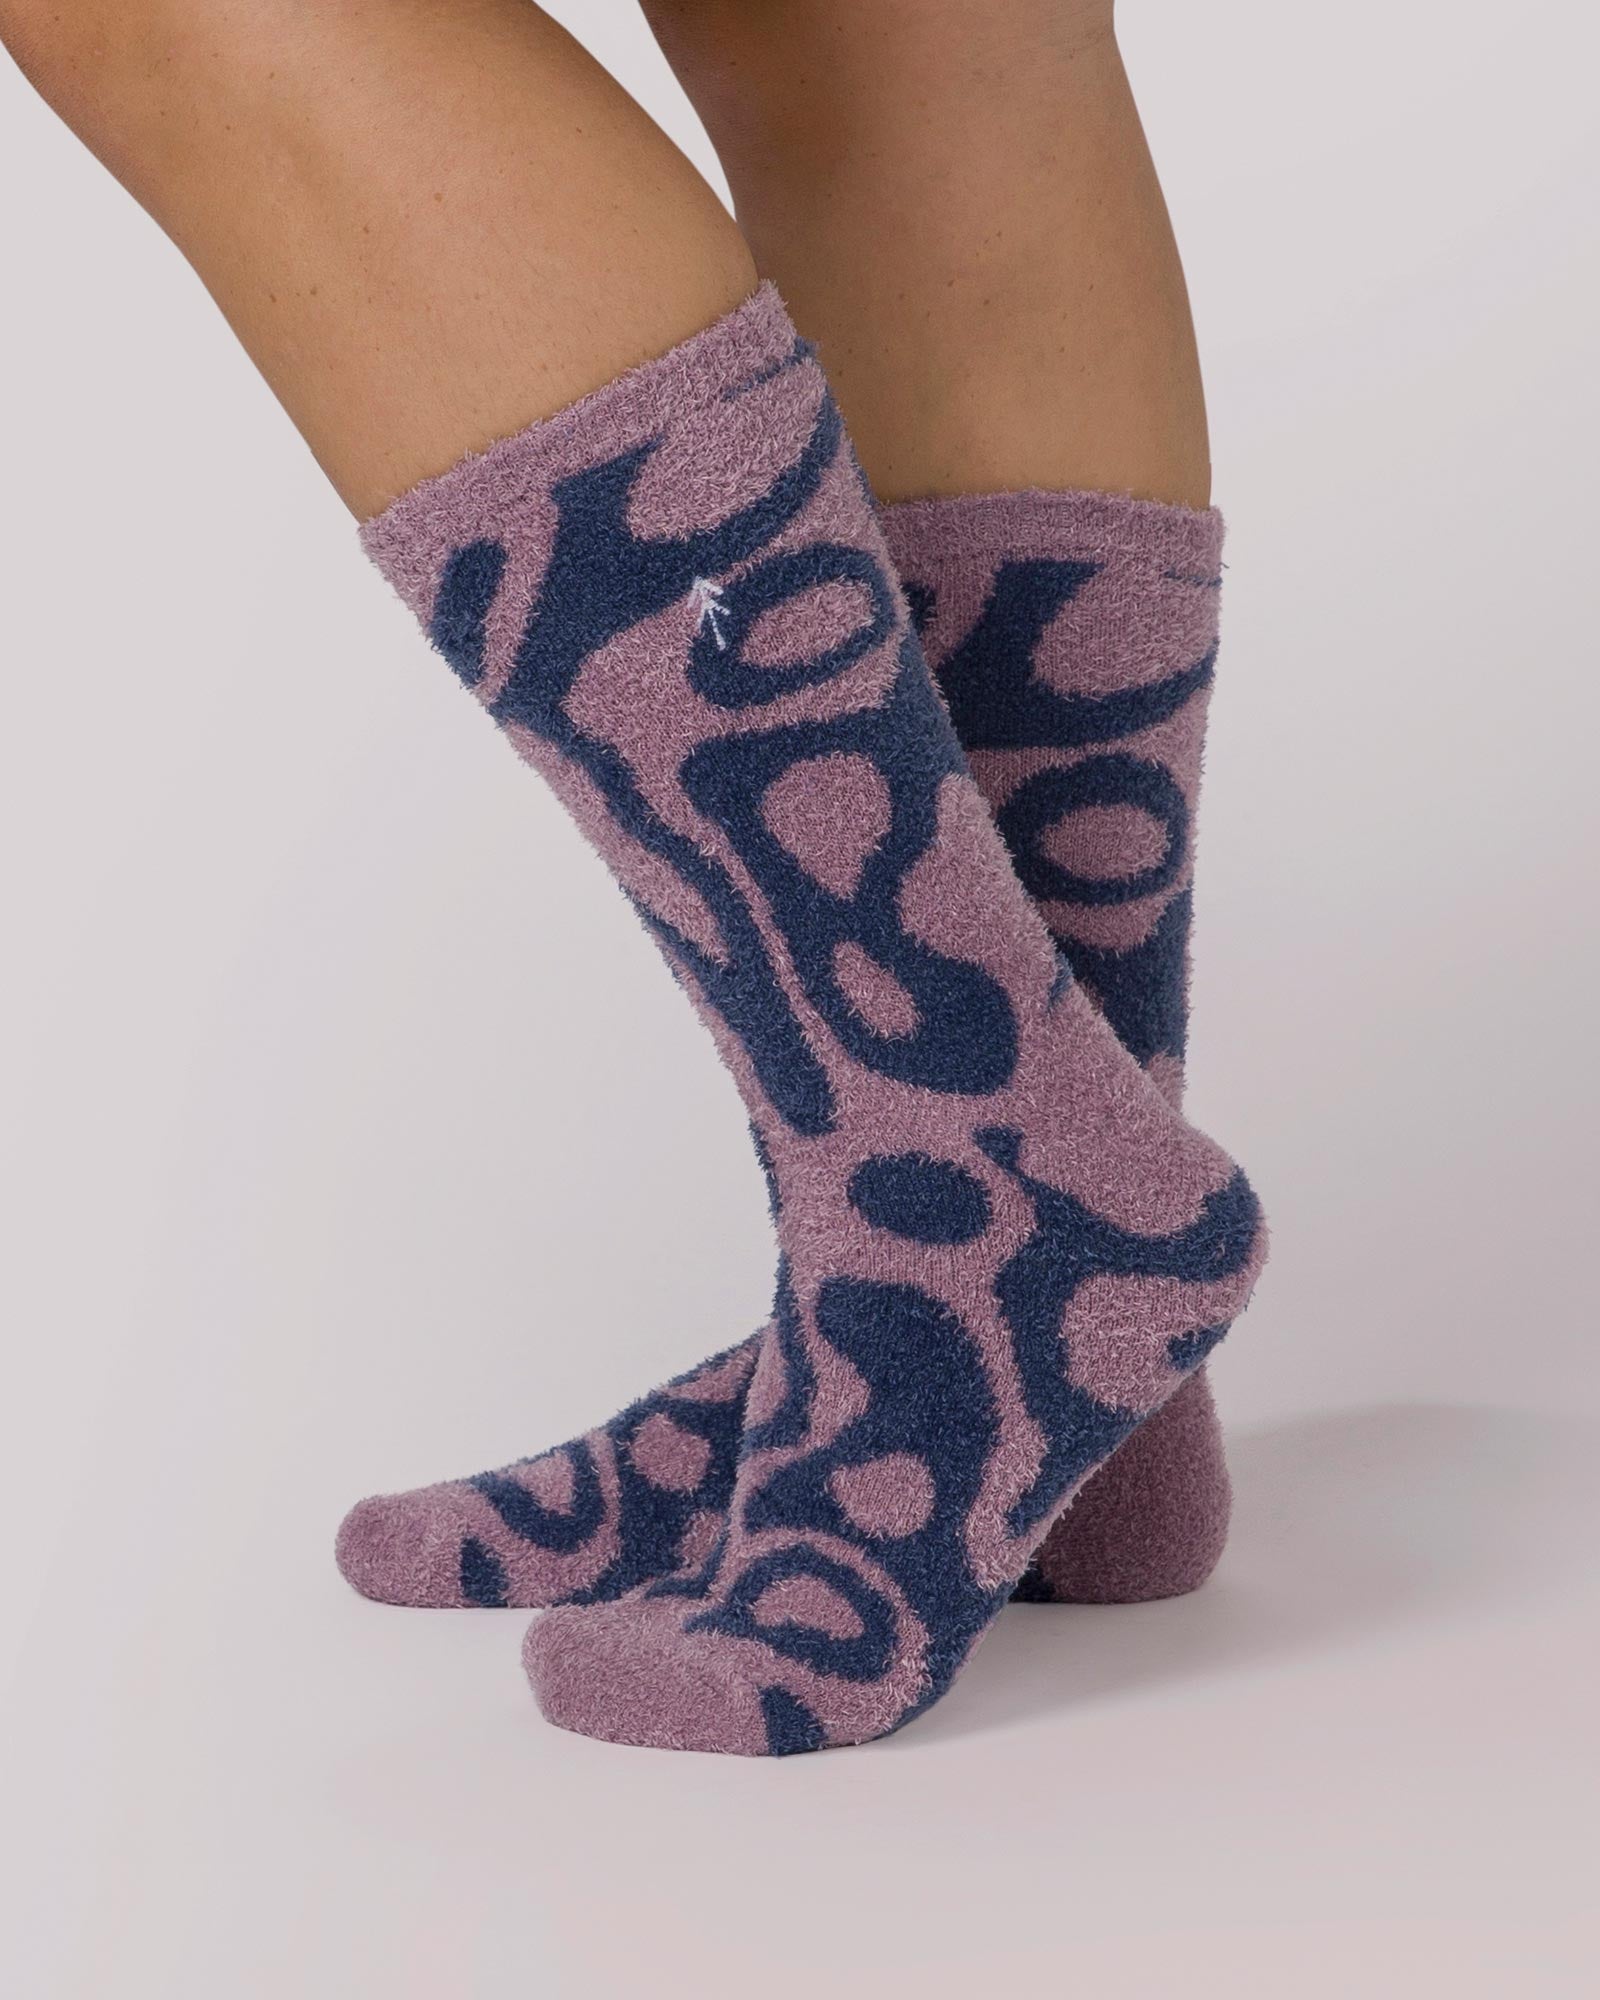 Shop Yellowstone Geysers Cozy Socks Inspired by Yellowstone | storm